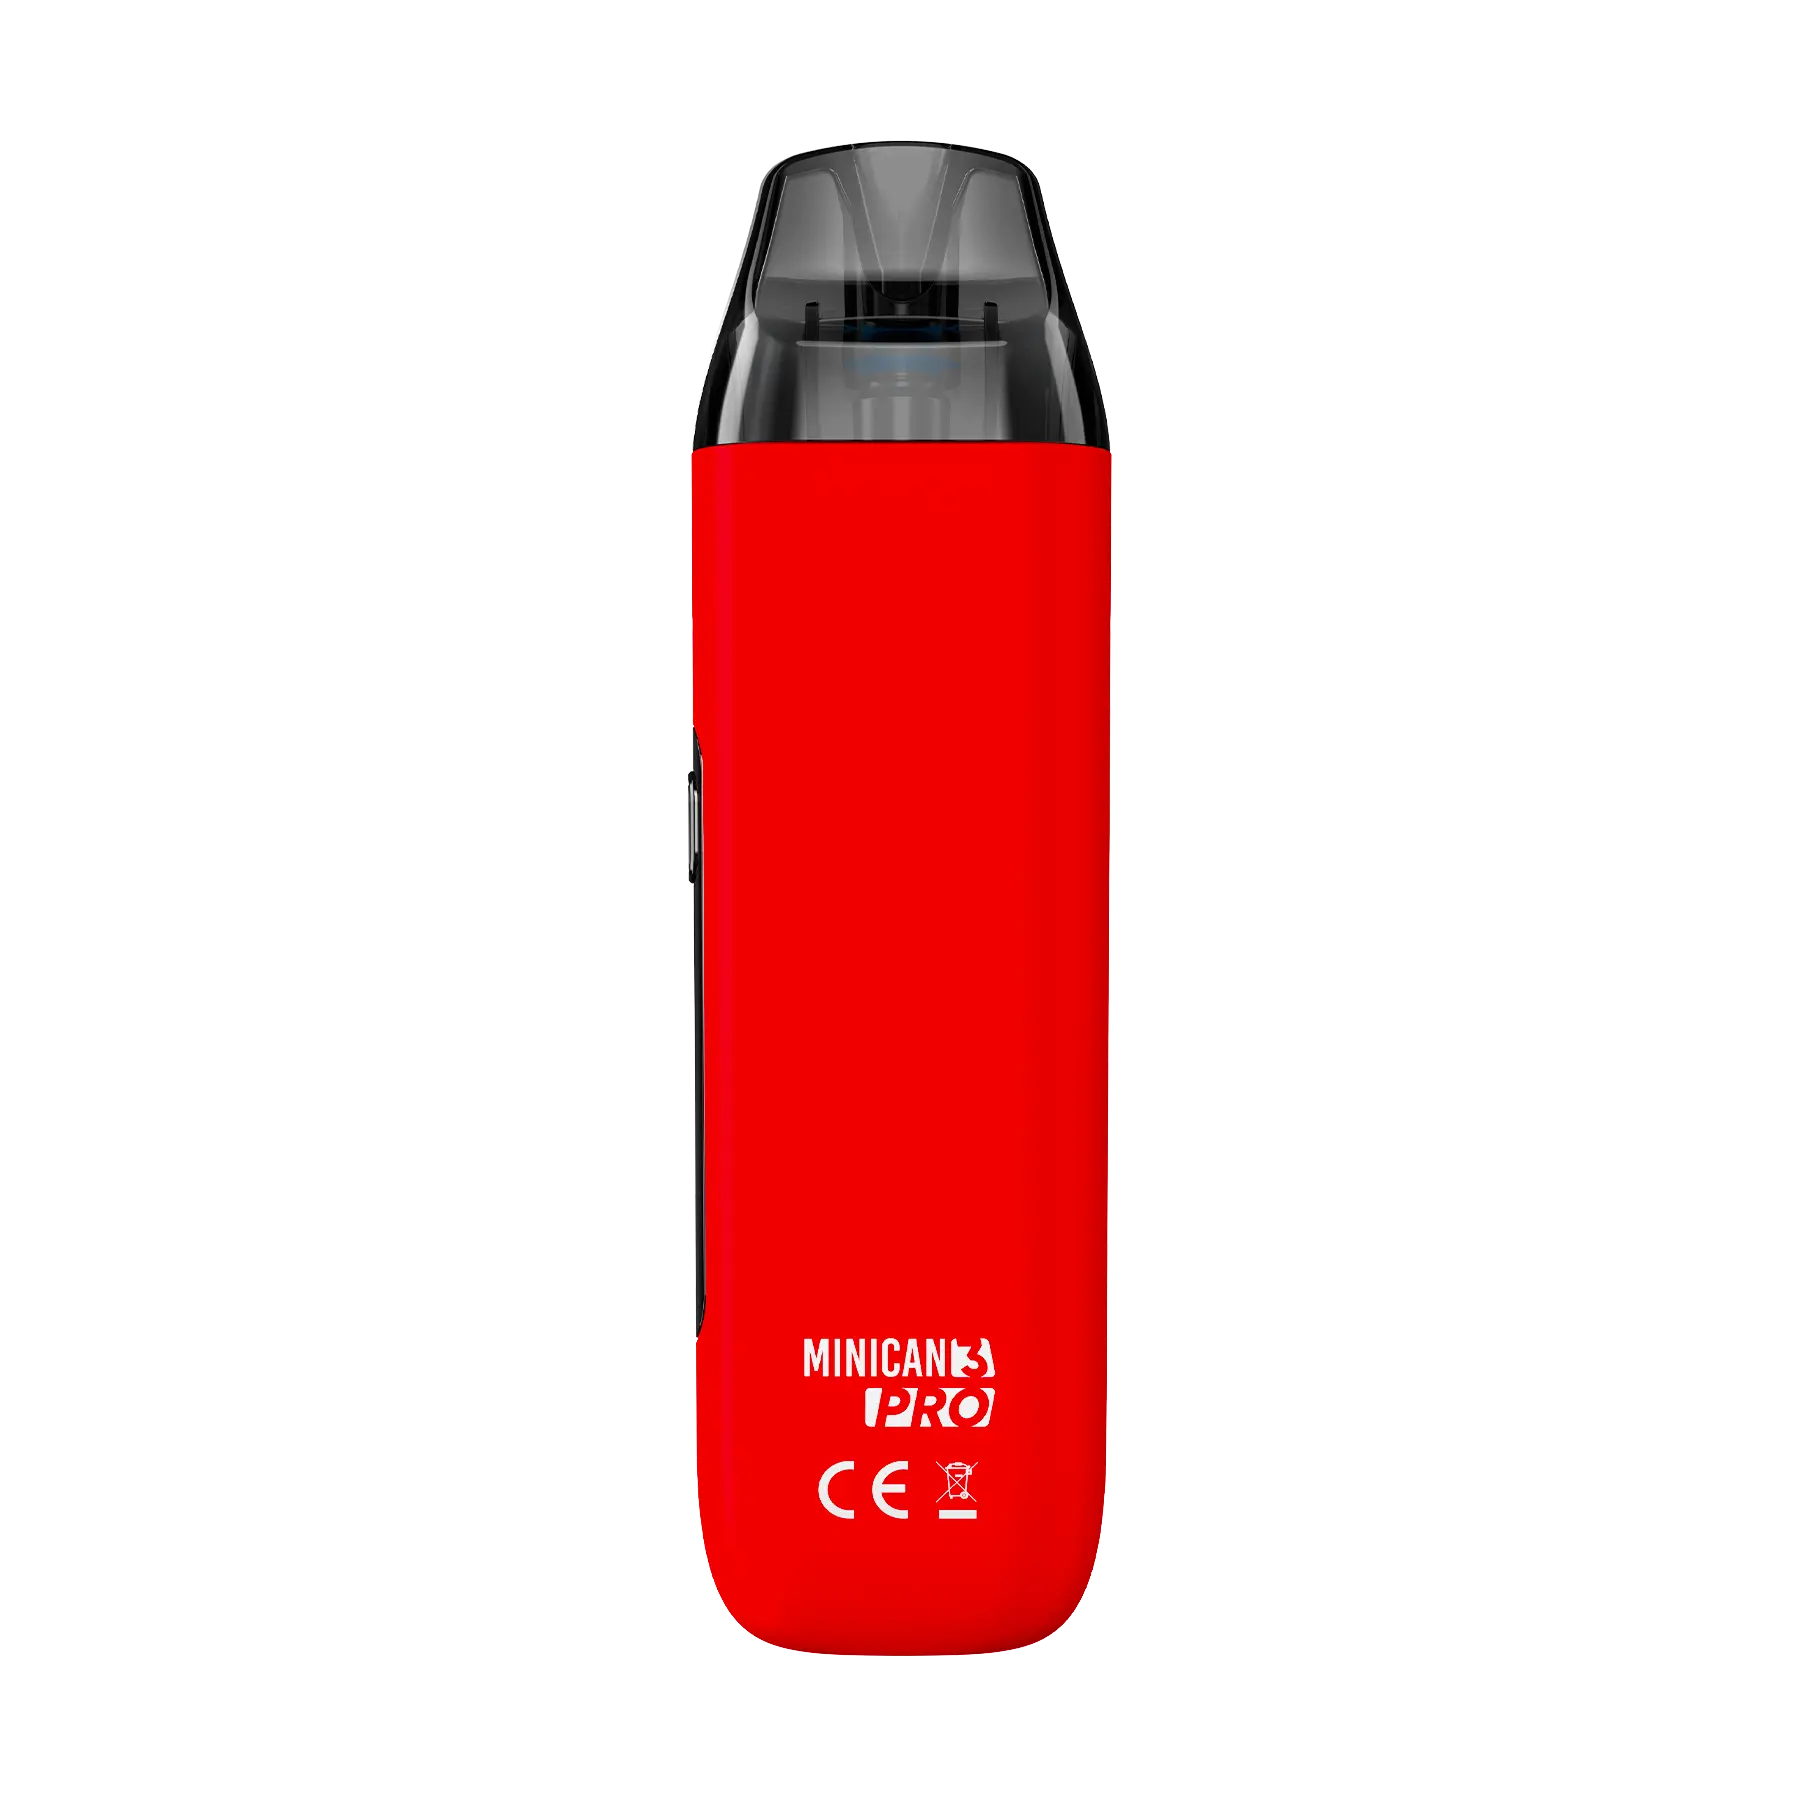 Aspire UK Minican 3 Pro 900mAh Pod Kit - Pinkish Red